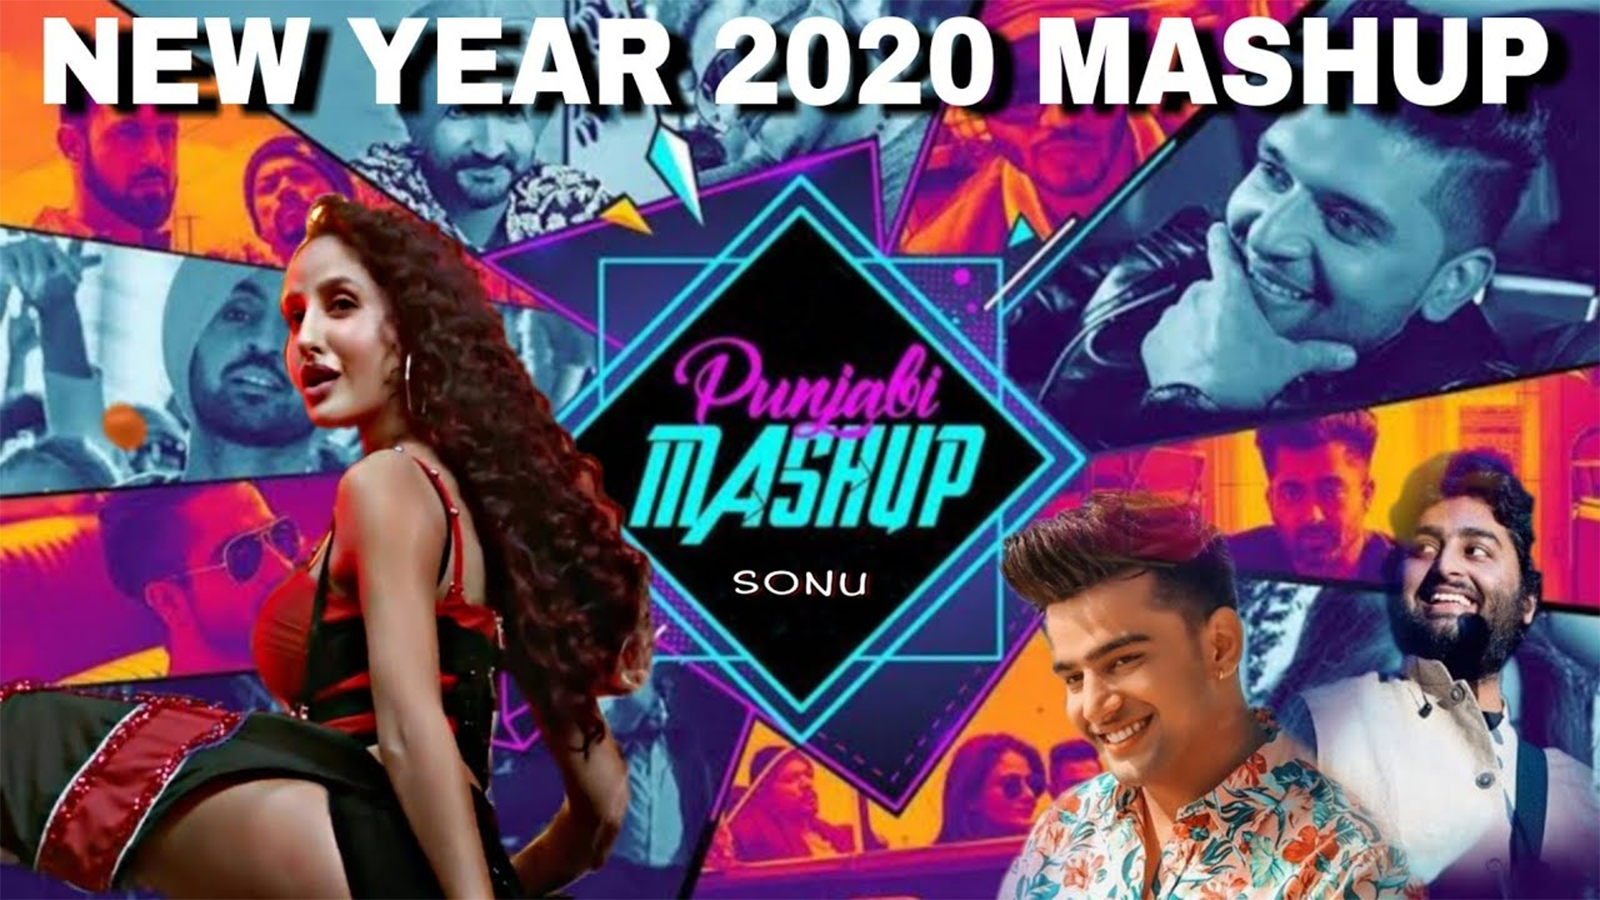 Punjabi Songs 2020 New Year 2020 Party Mix Mashup Sung By Guru Randhawa Neha Kakkar And Jass Manak Guri Punjabi Video Songs Times Of India - download mp3 dora remix roblox id code 2018 free